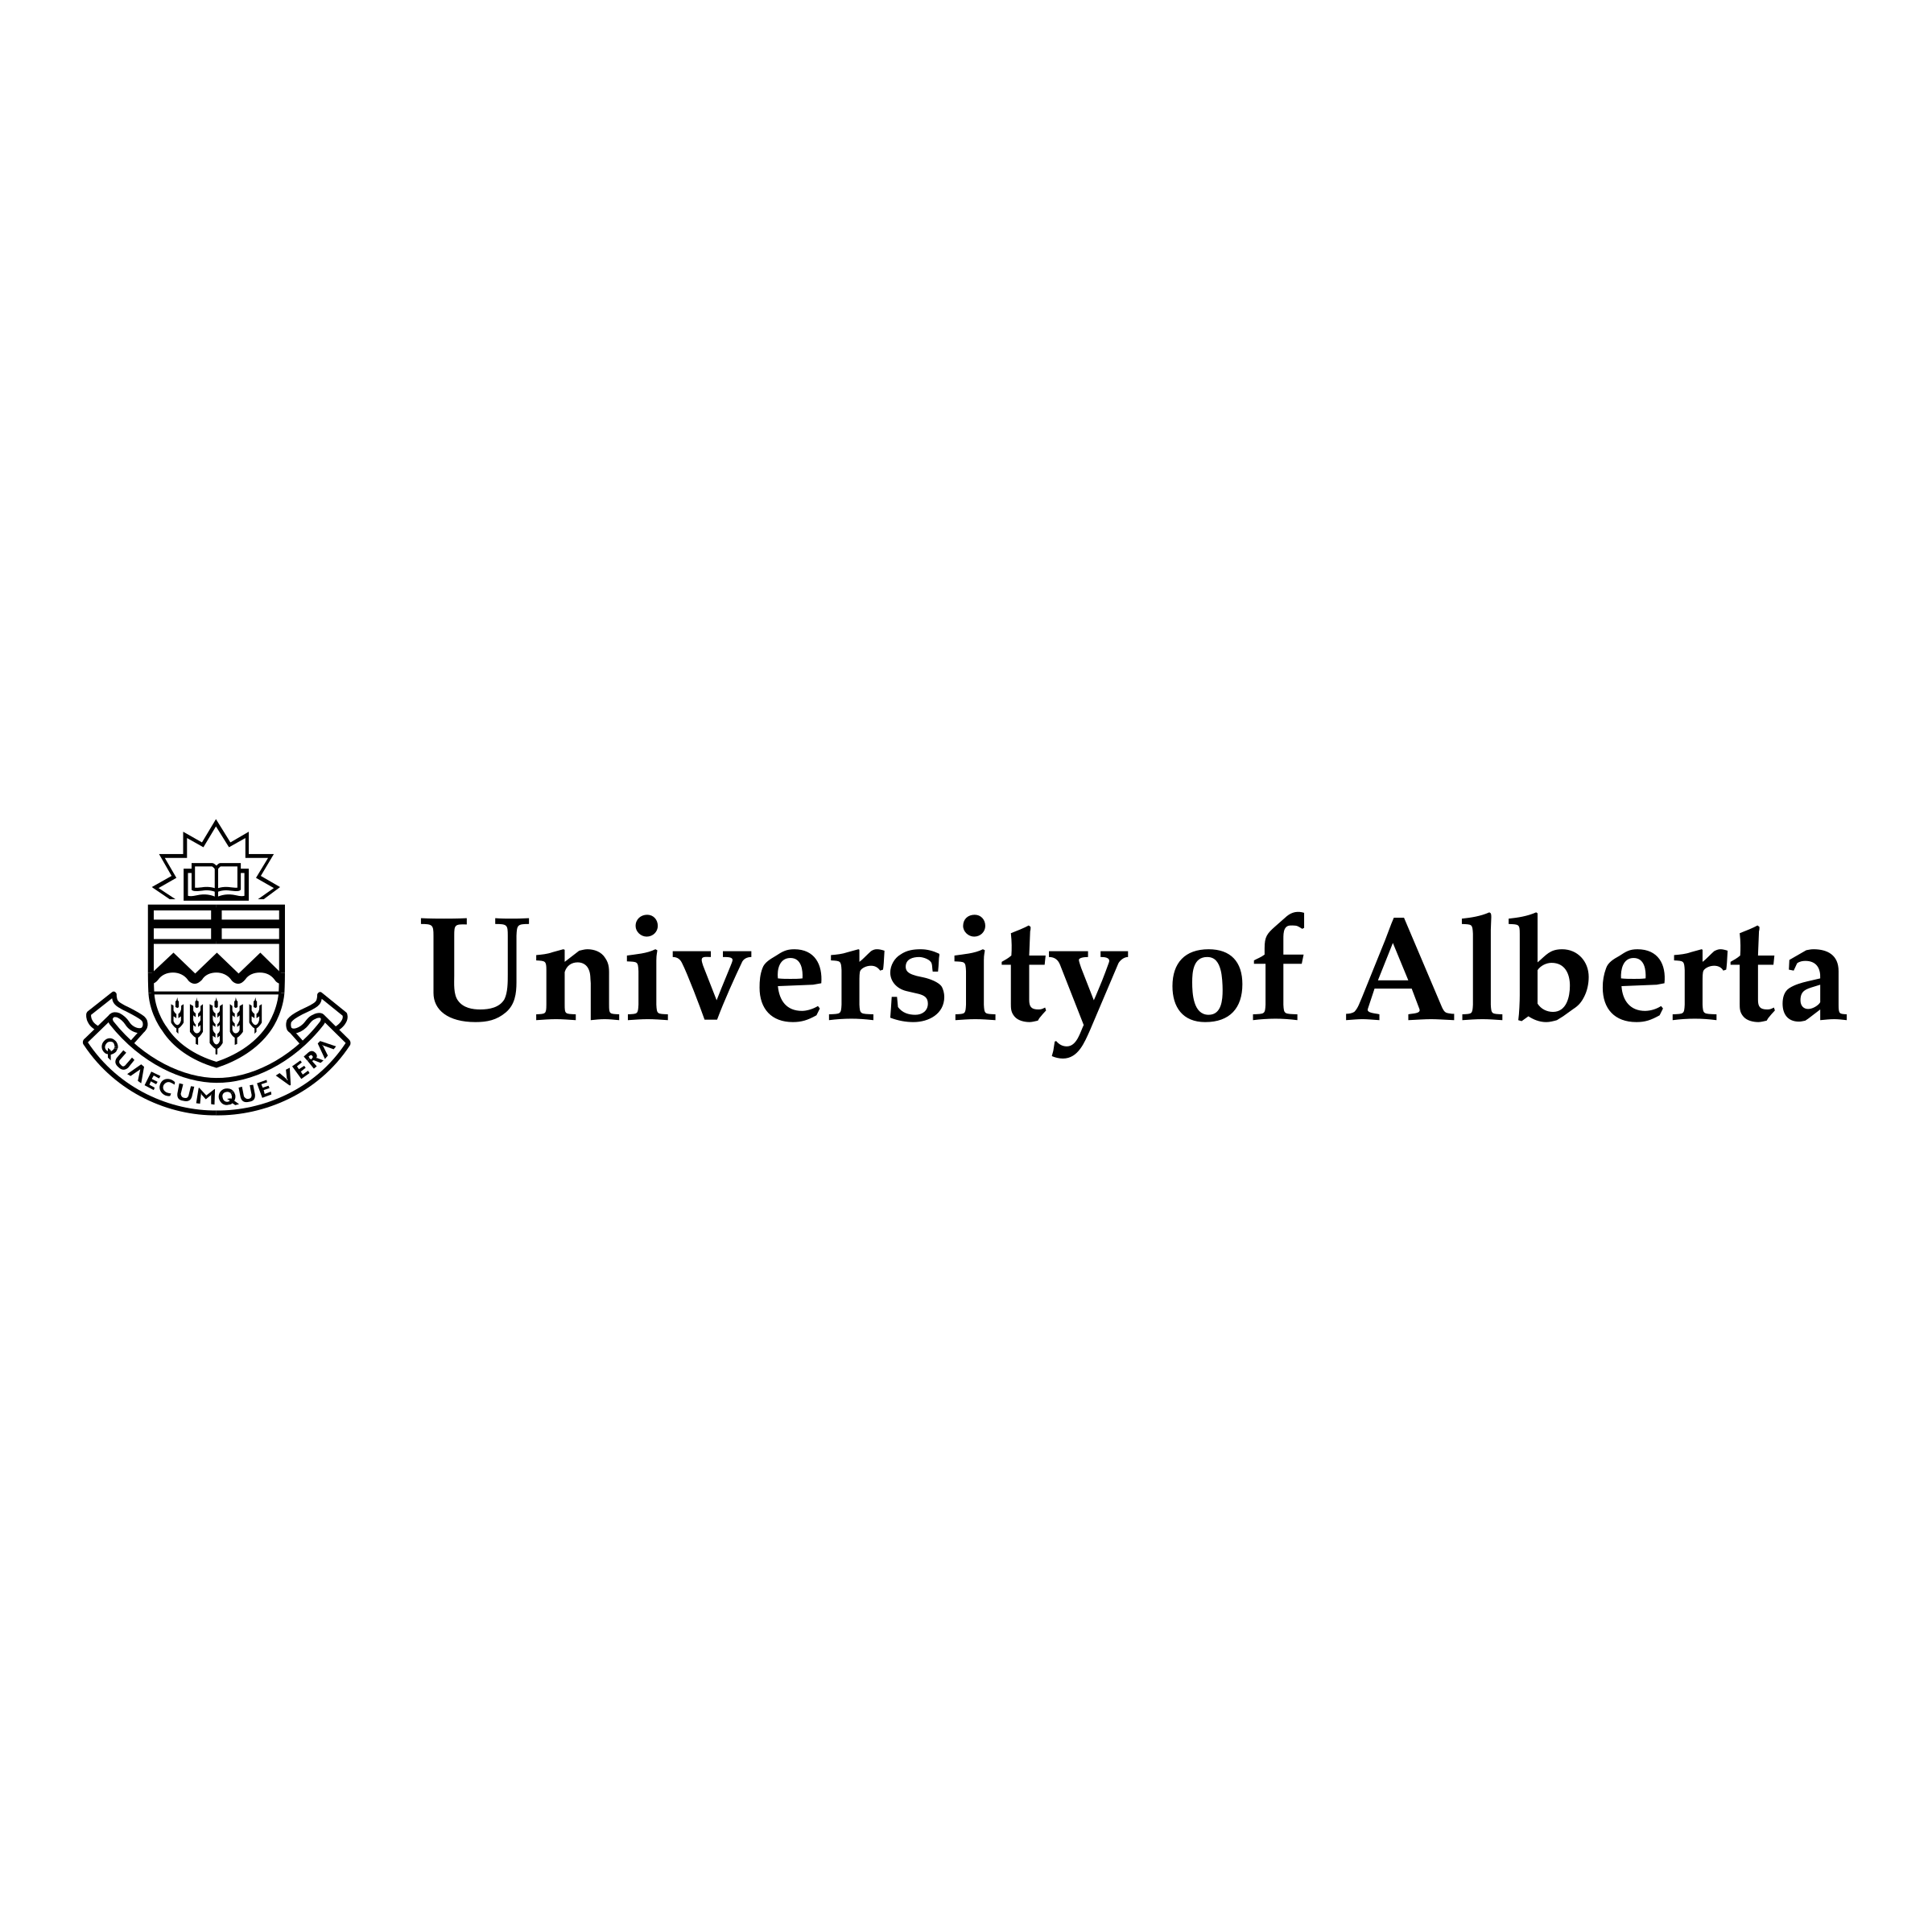 University of Alberta Logo - University of Alberta Logo PNG Transparent & SVG Vector